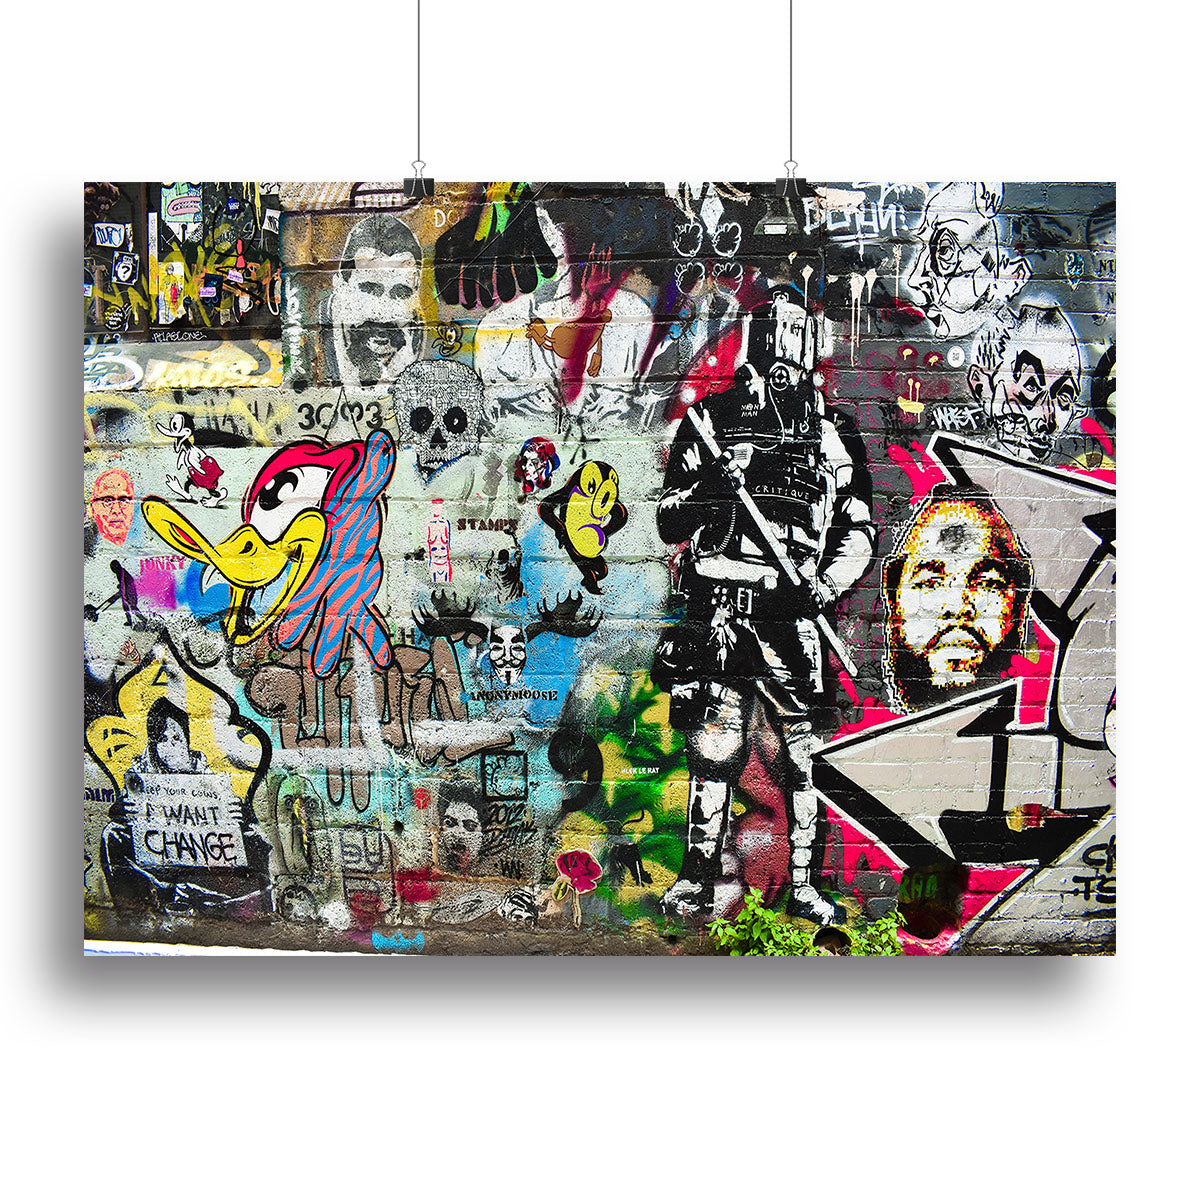 Graffiti Wall Abstract Canvas Print or Poster - Canvas Art Rocks - 2